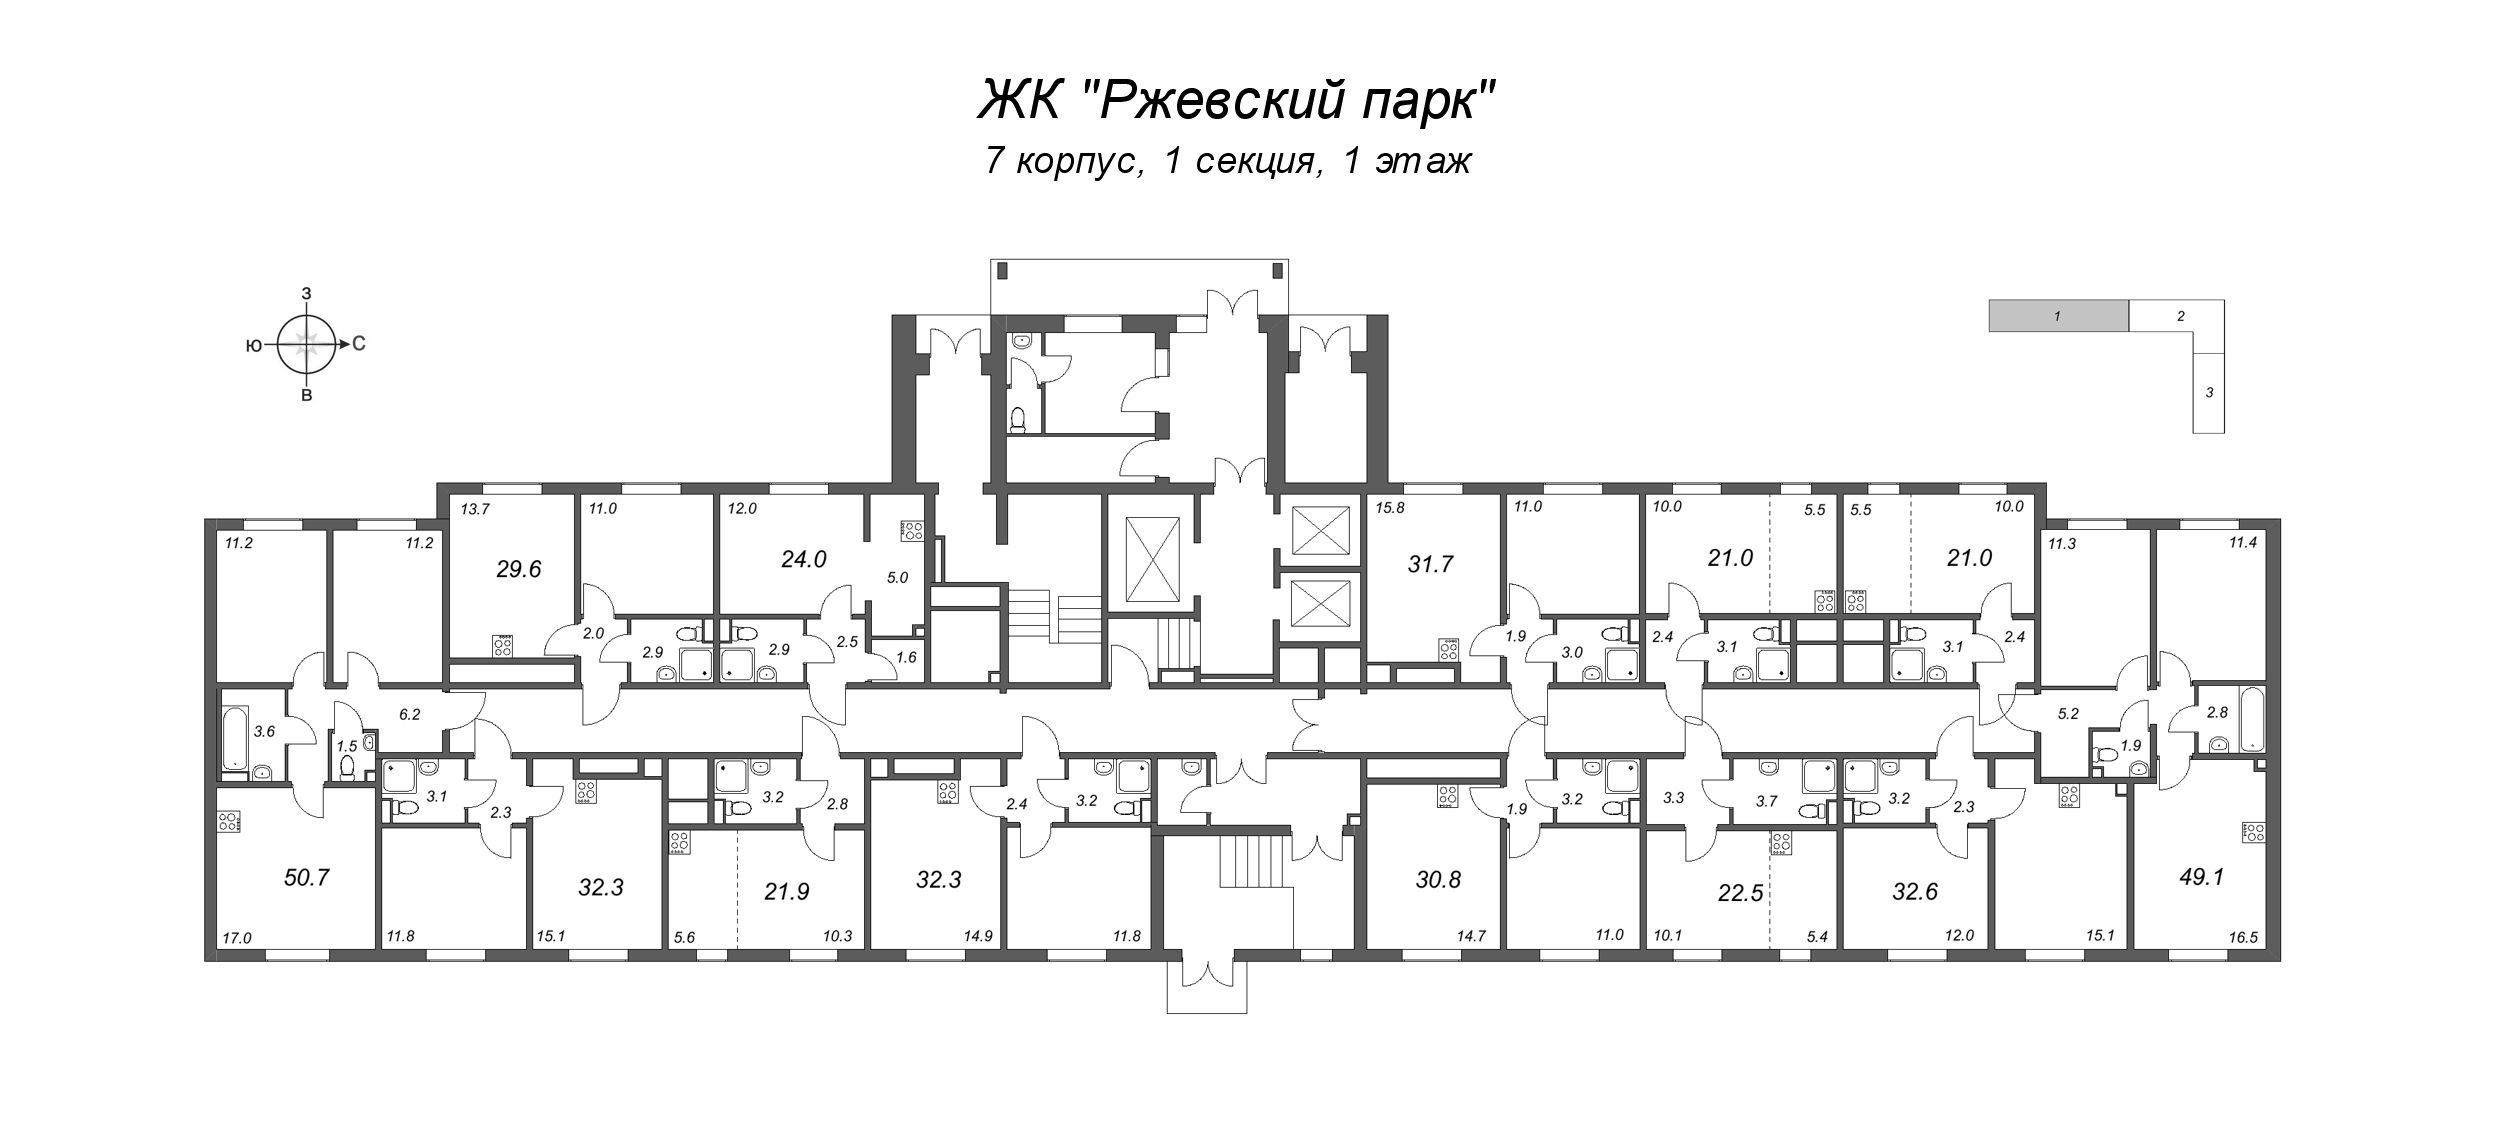 3-комнатная (Евро) квартира, 49.1 м² - планировка этажа